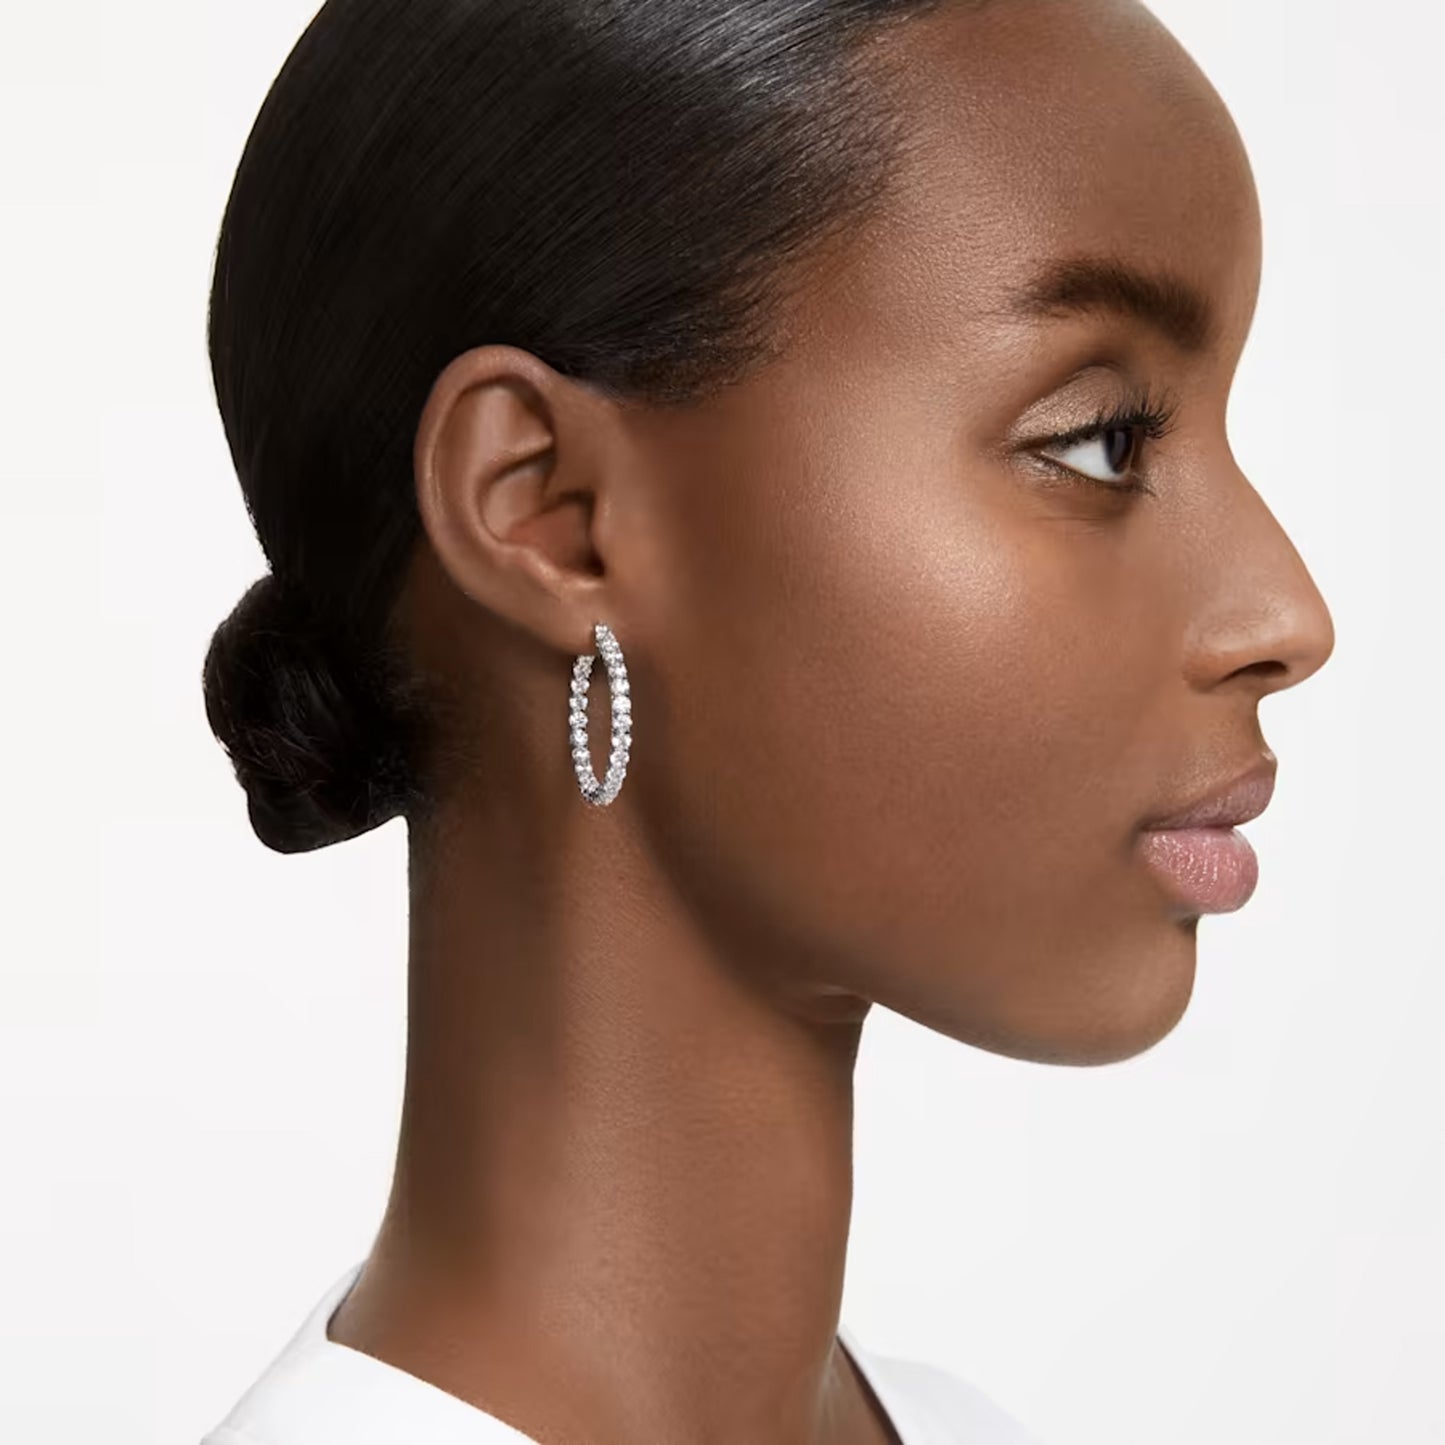 Matrix hoop earrings